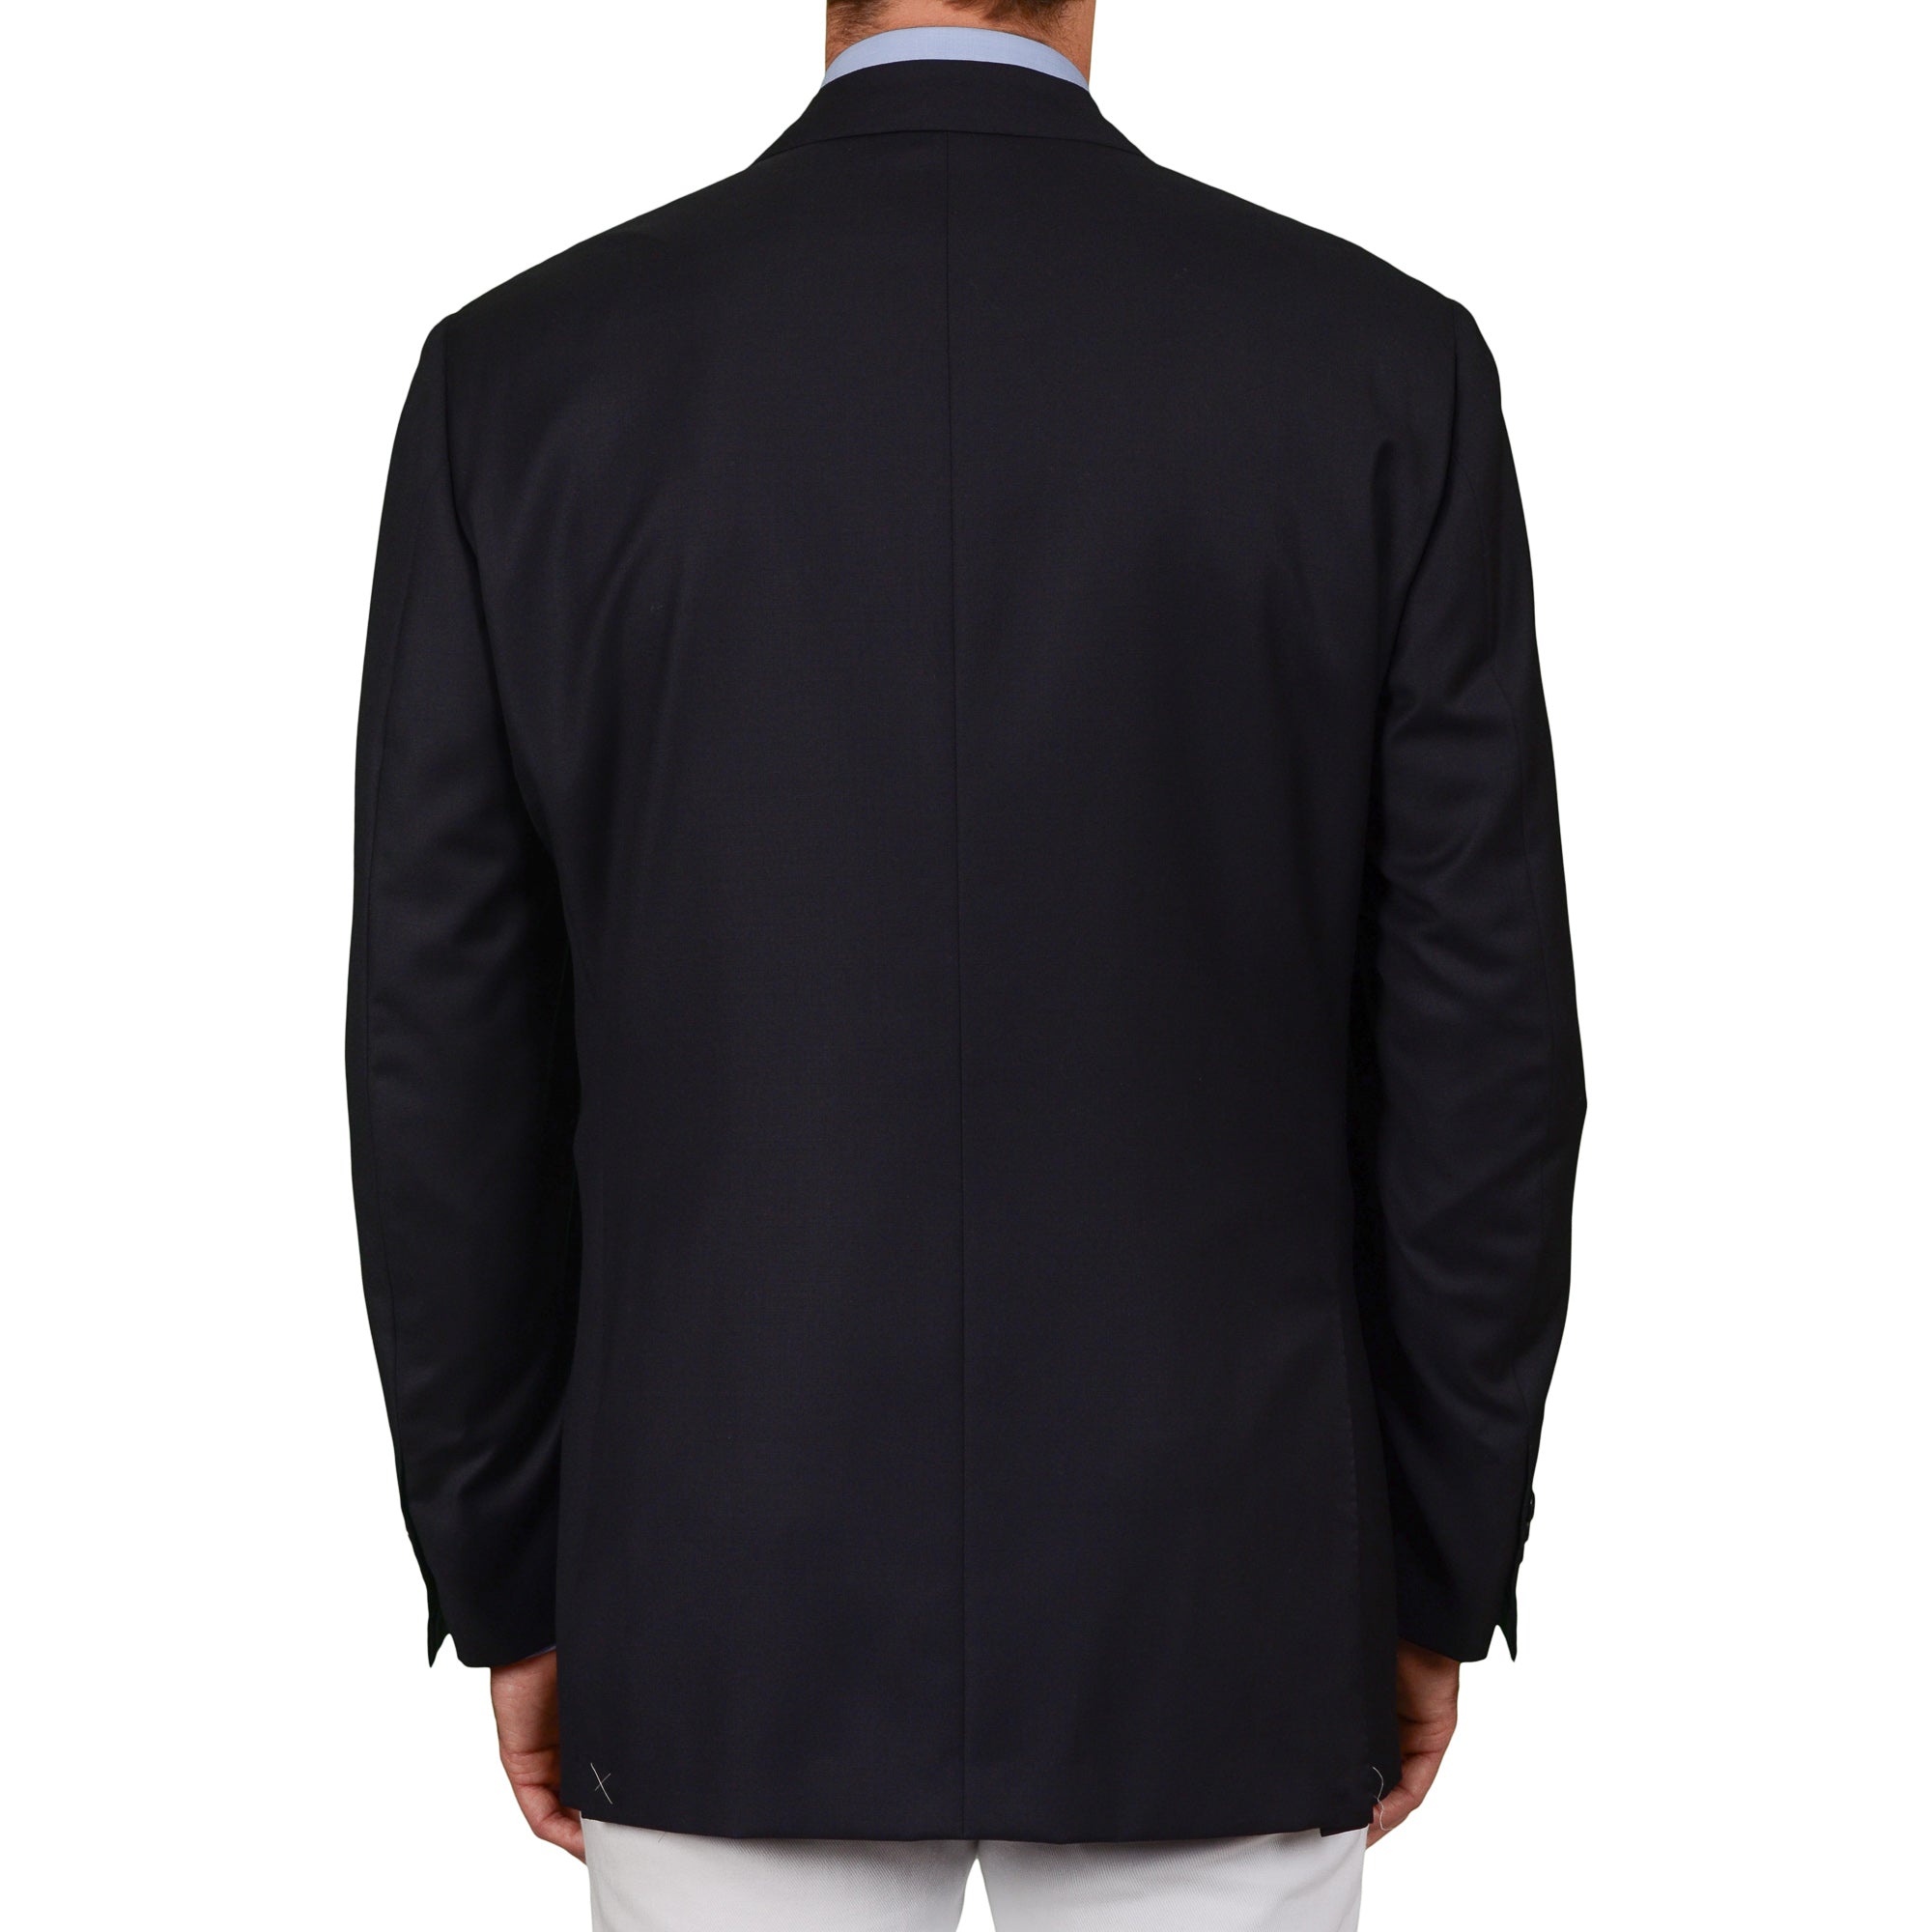 AMIR Handmade Dark Blue Wool Super 150's Jacket Sport Coat EU 54 NEW US 44 AMIR